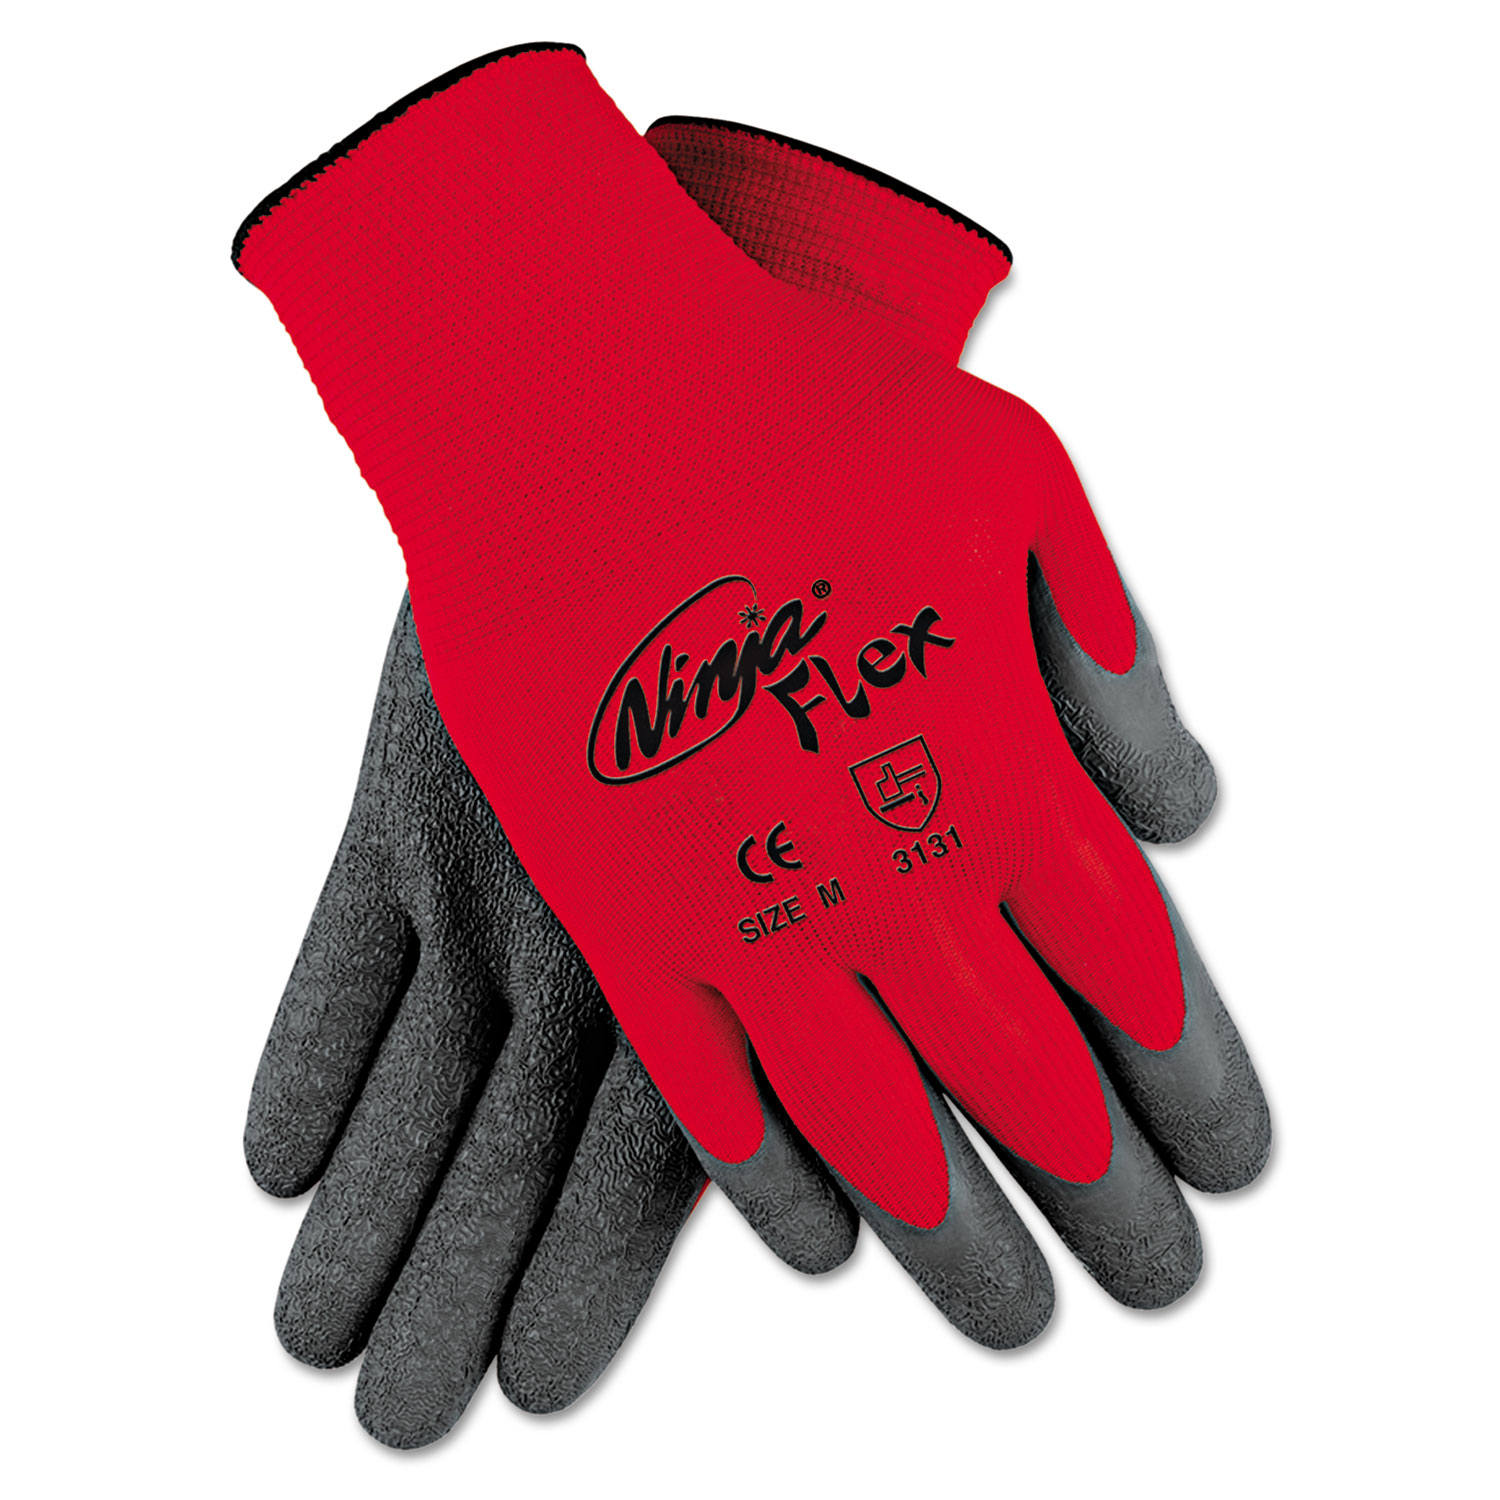 Ninja Flex Latex-Coated-Palm Gloves, Nylon Shell, Large, Red/Gray (12 pair)